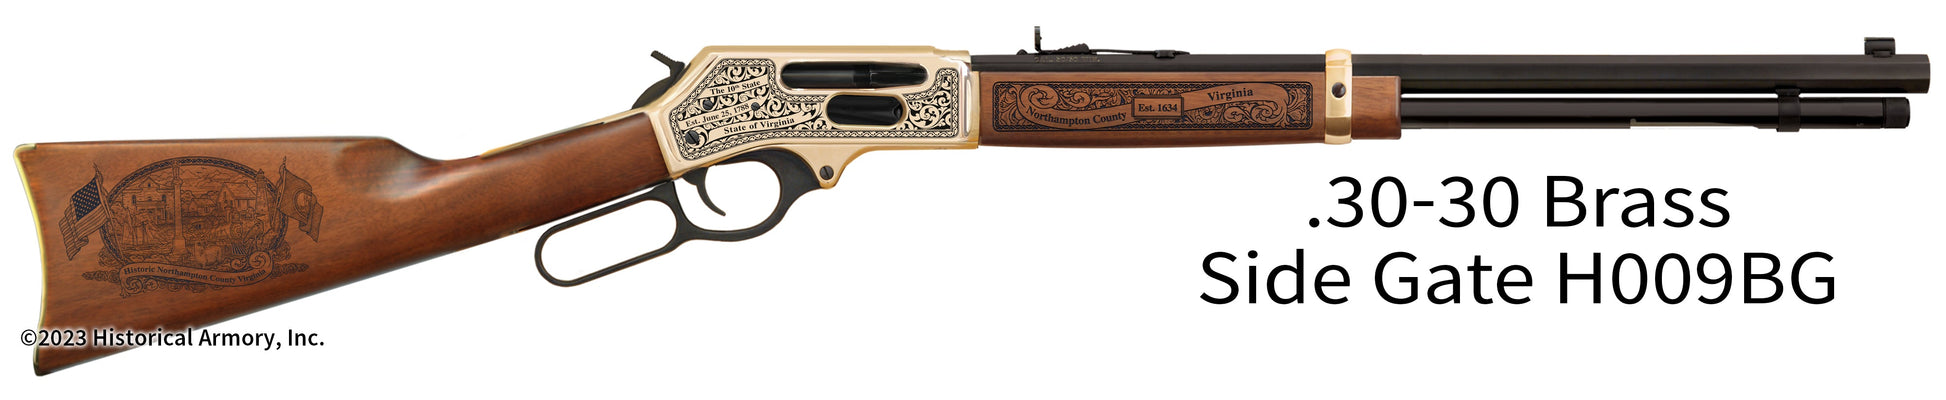 Northampton County Virginia Engraved Henry .30-30 Brass Side Gate Rifle